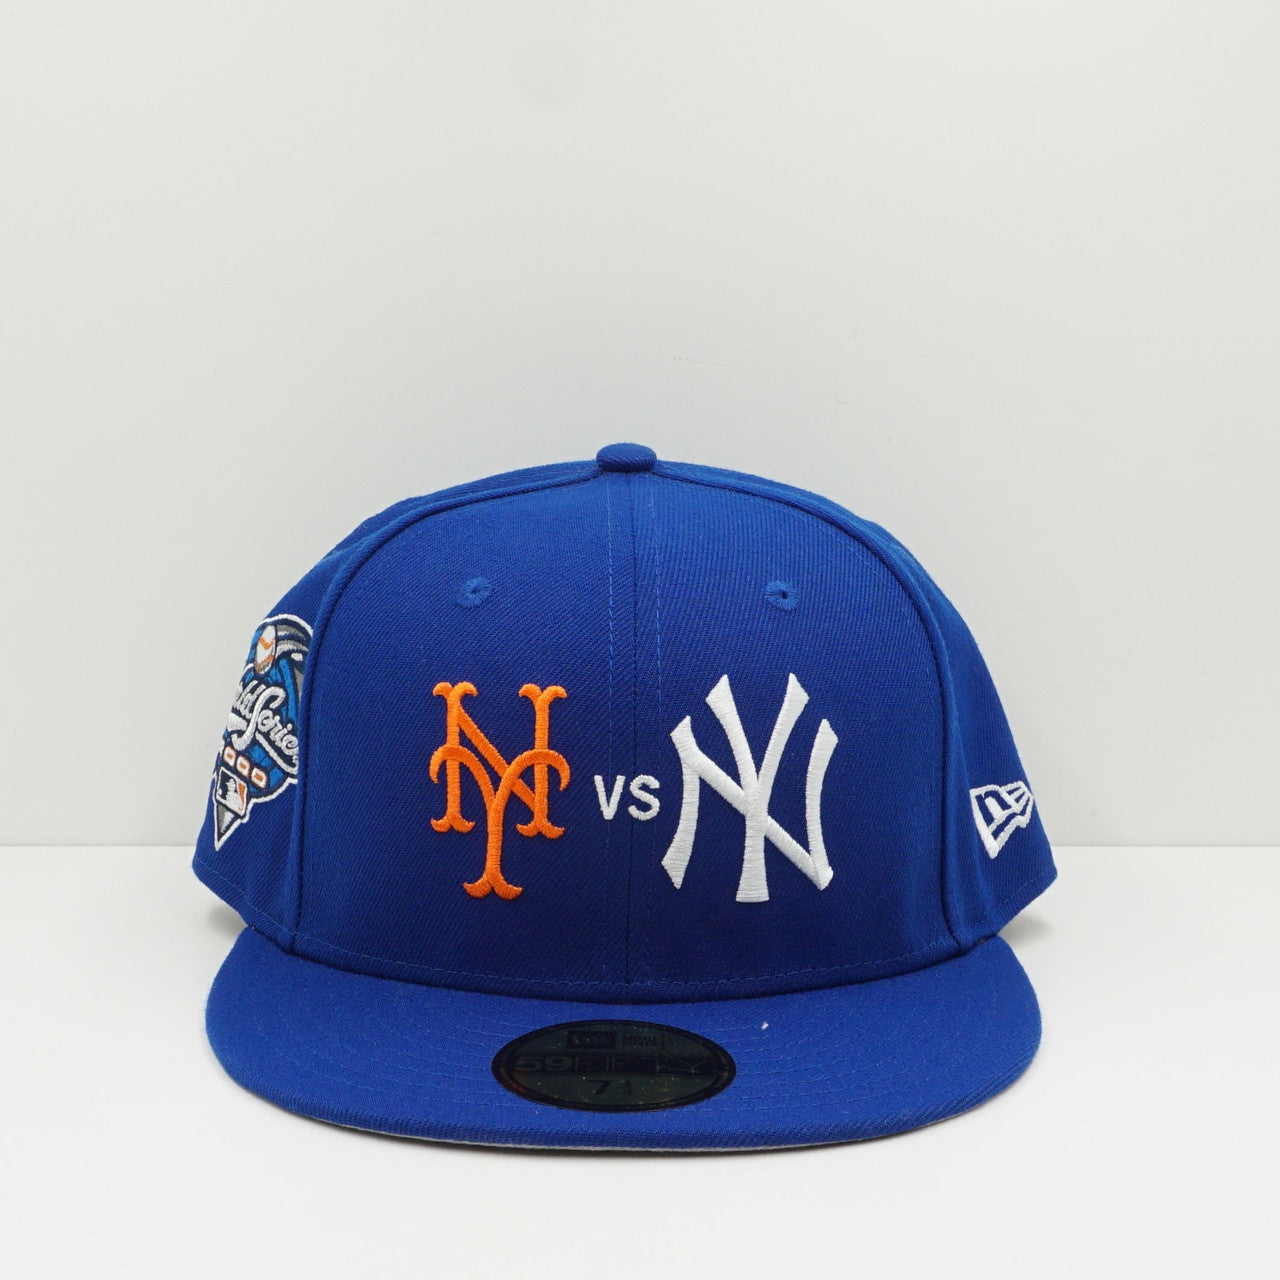 New Era New York Mets VS New York Yankees Fitted Cap